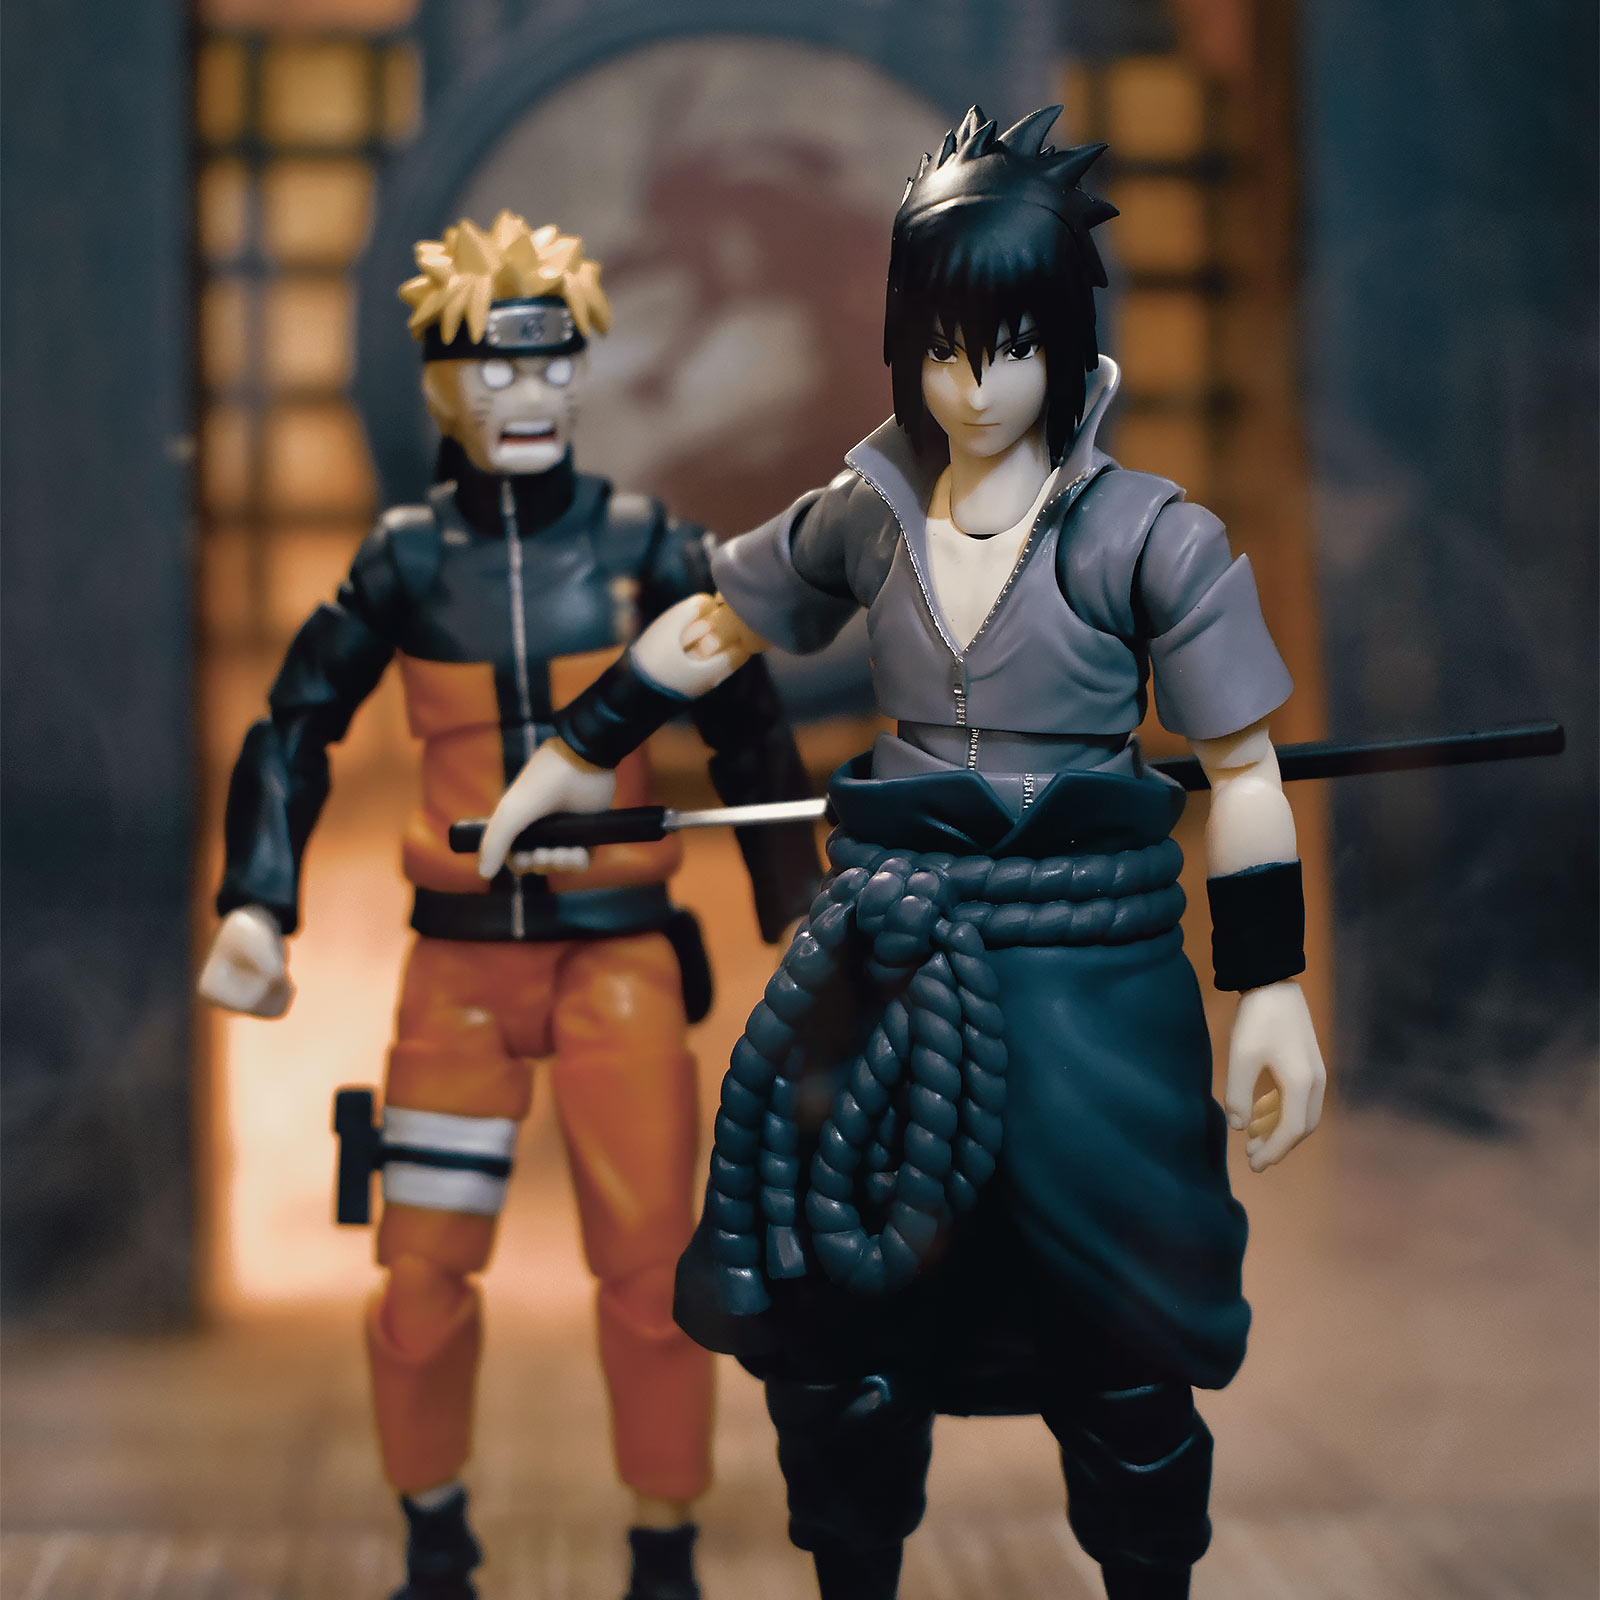 Naruto Shippuden - Sasuke Uchiha Celui qui porte toute la haine Figurine d'action